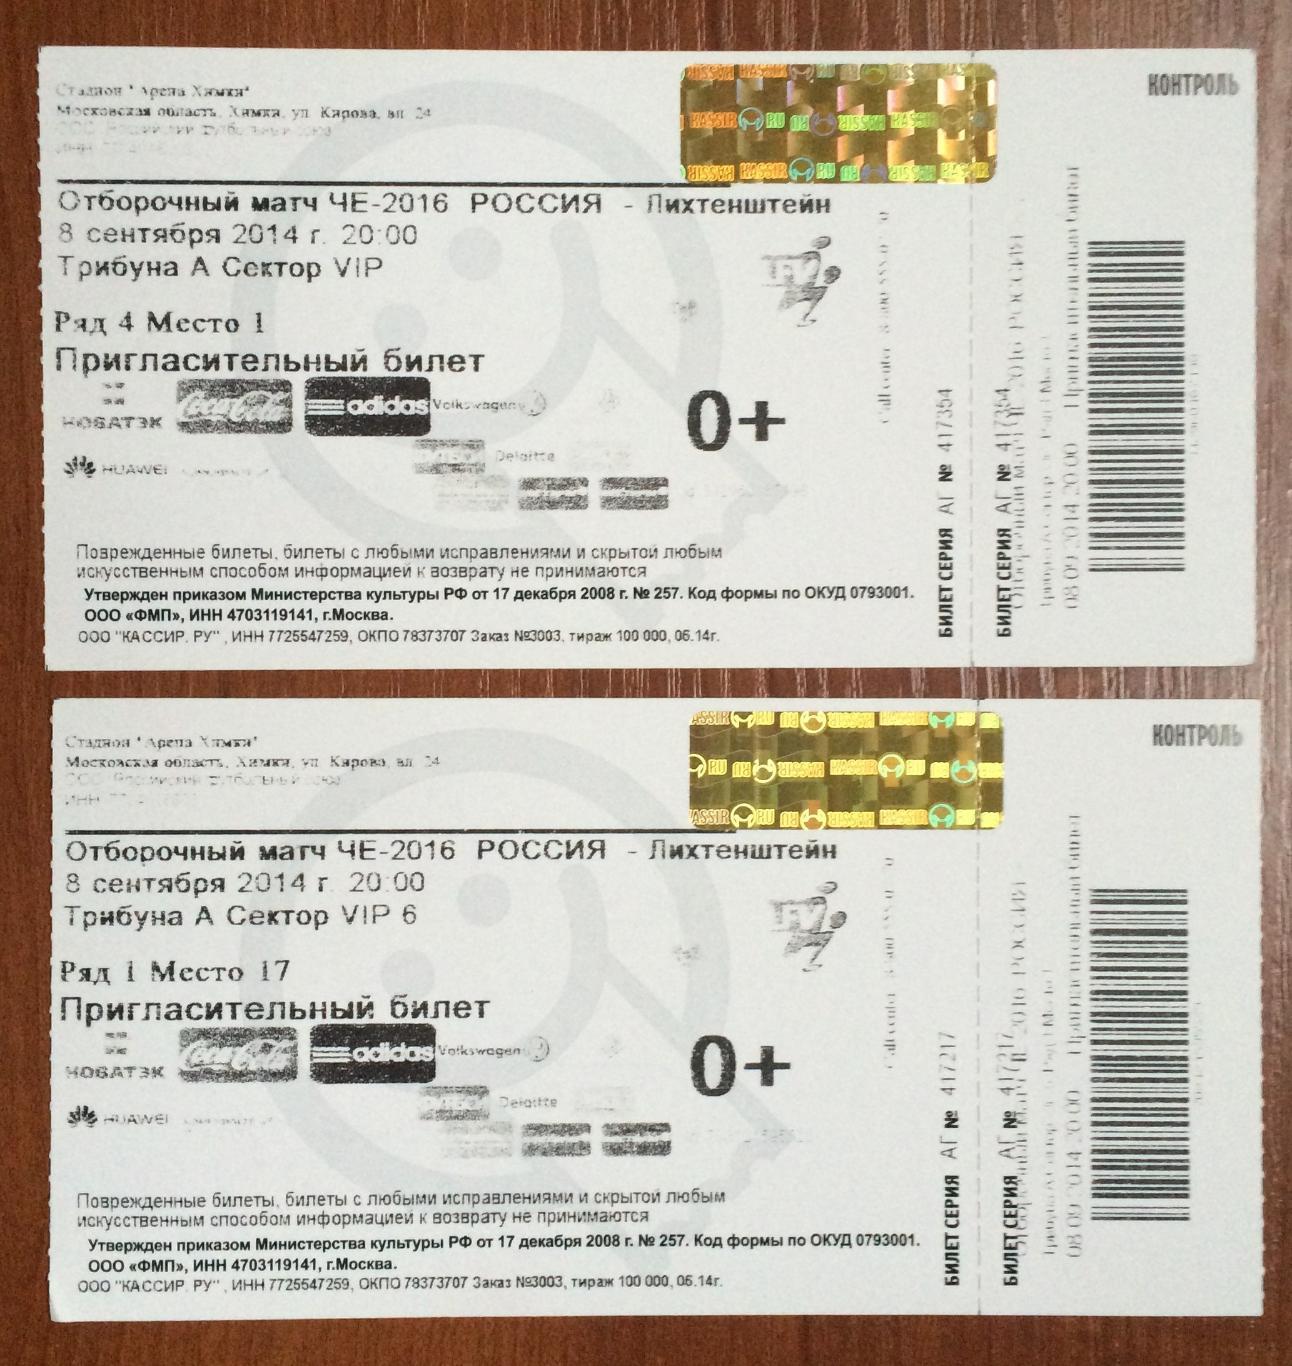 Билет футбол Россия - Лихтенштейн 08.09.2014 год трибуна VIP и VIP 6